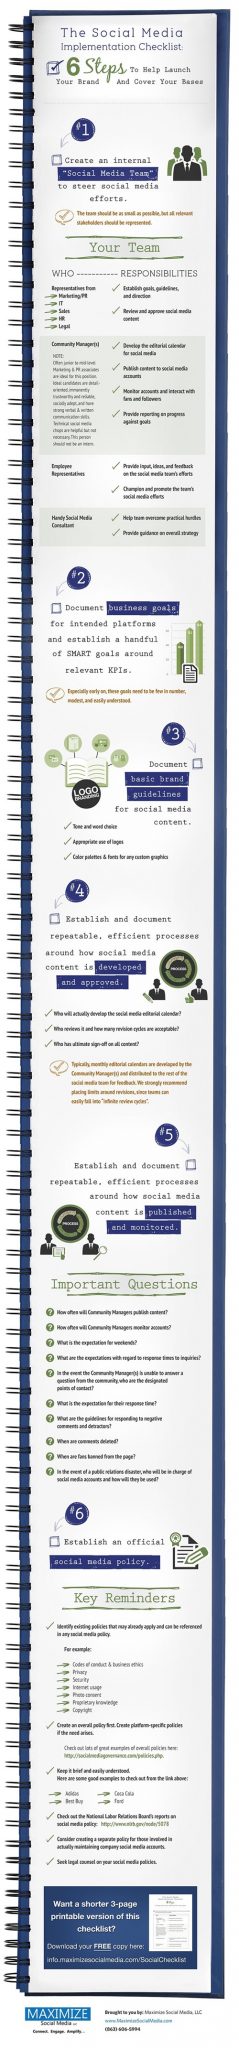 The Social Media Implementation Checklist